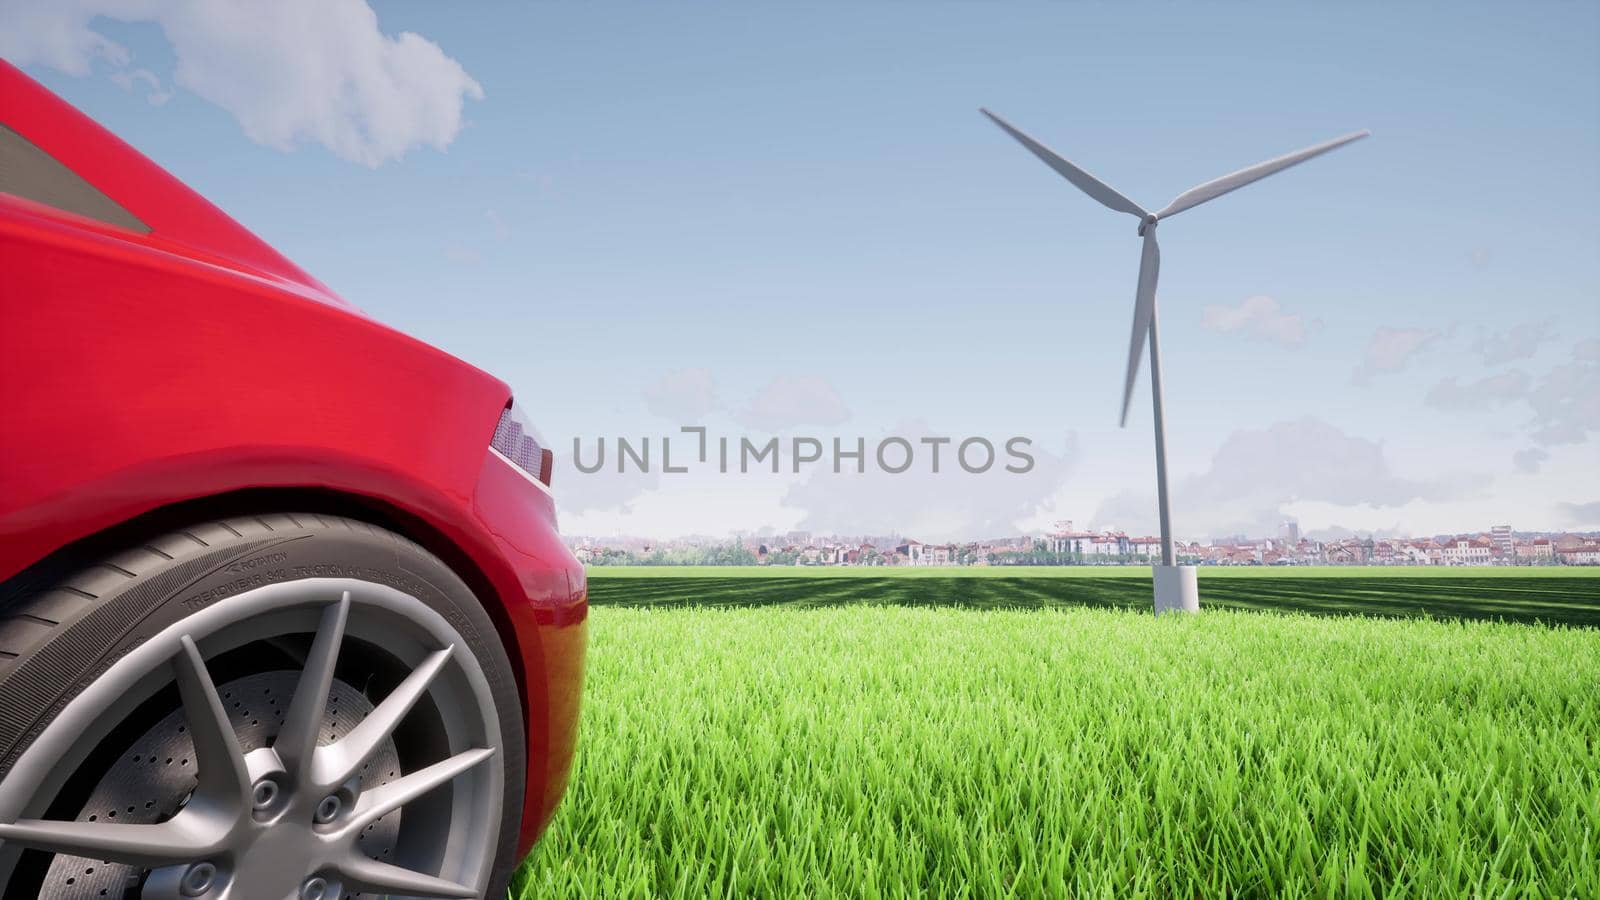 Car wind generator Sustainable clean green Renewable energy Wind turbine Alternative power 3d render by Zozulinskyi